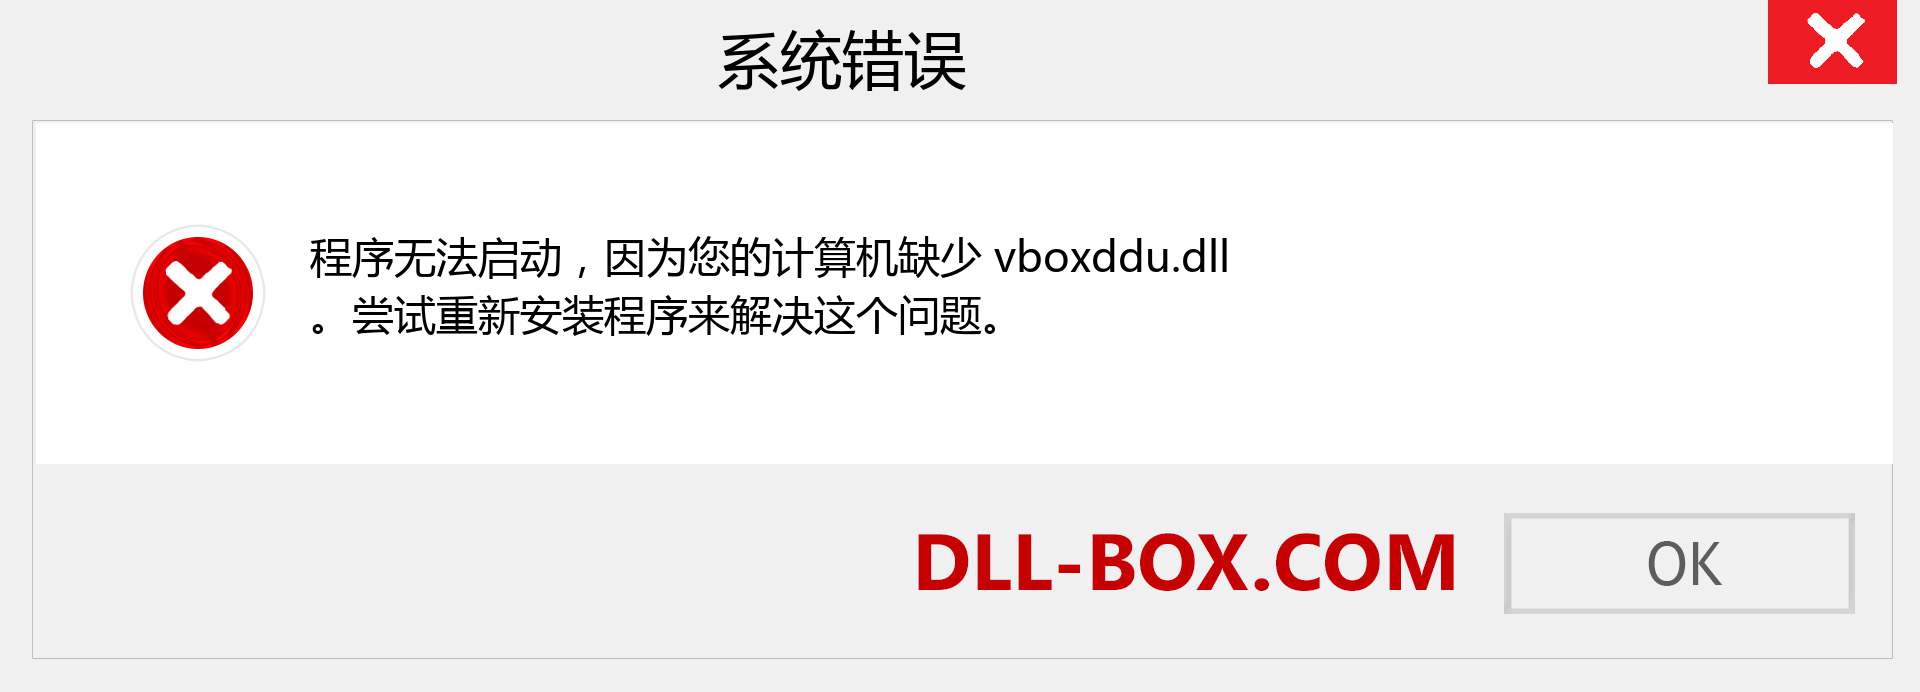 vboxddu.dll 文件丢失？。 适用于 Windows 7、8、10 的下载 - 修复 Windows、照片、图像上的 vboxddu dll 丢失错误